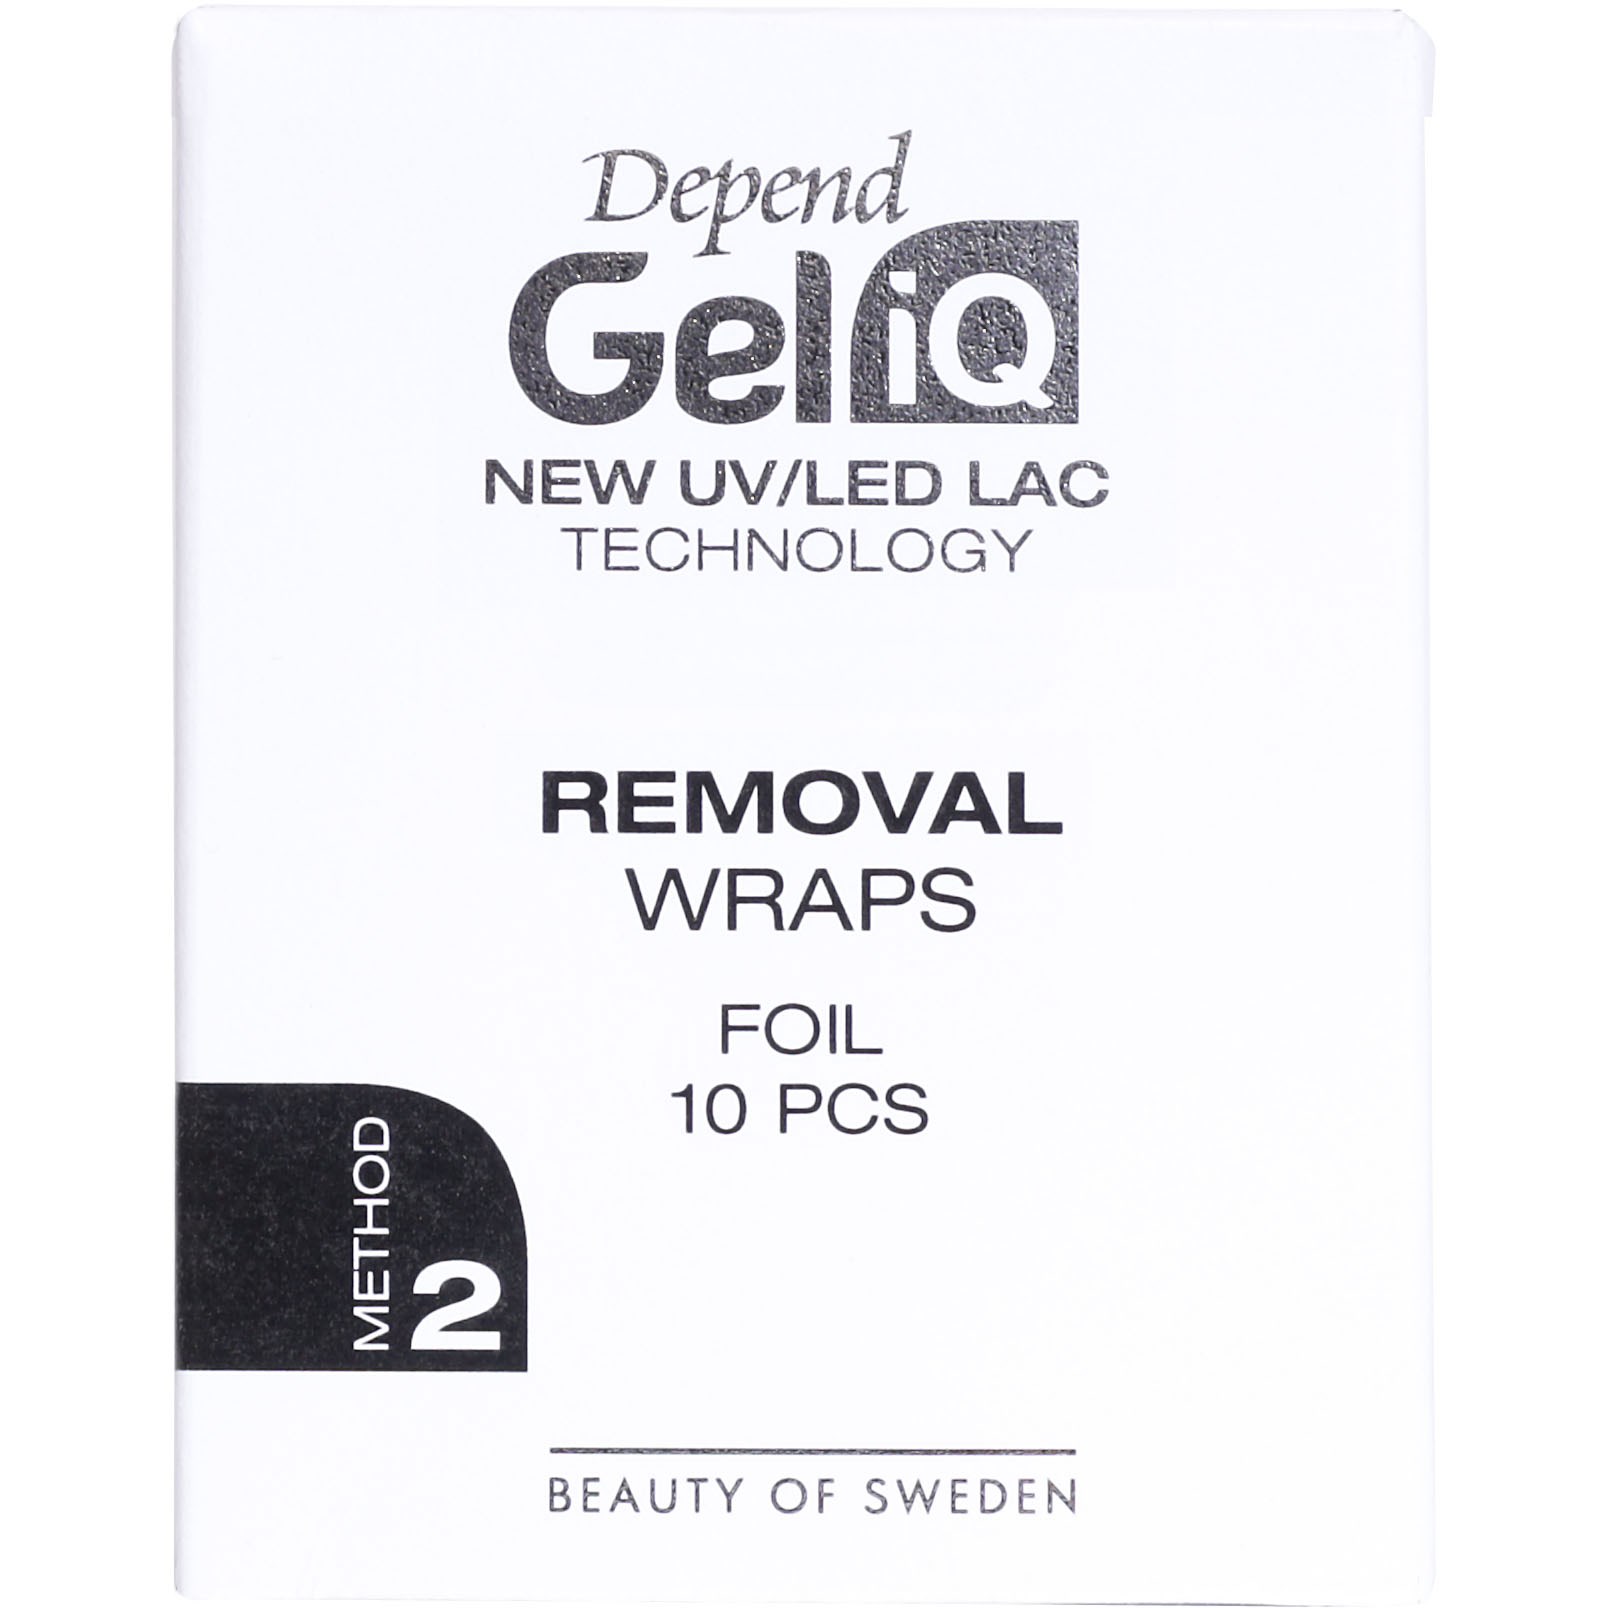 Läs mer om Depend Gel iQ Removal Wraps Foil 10 pcs